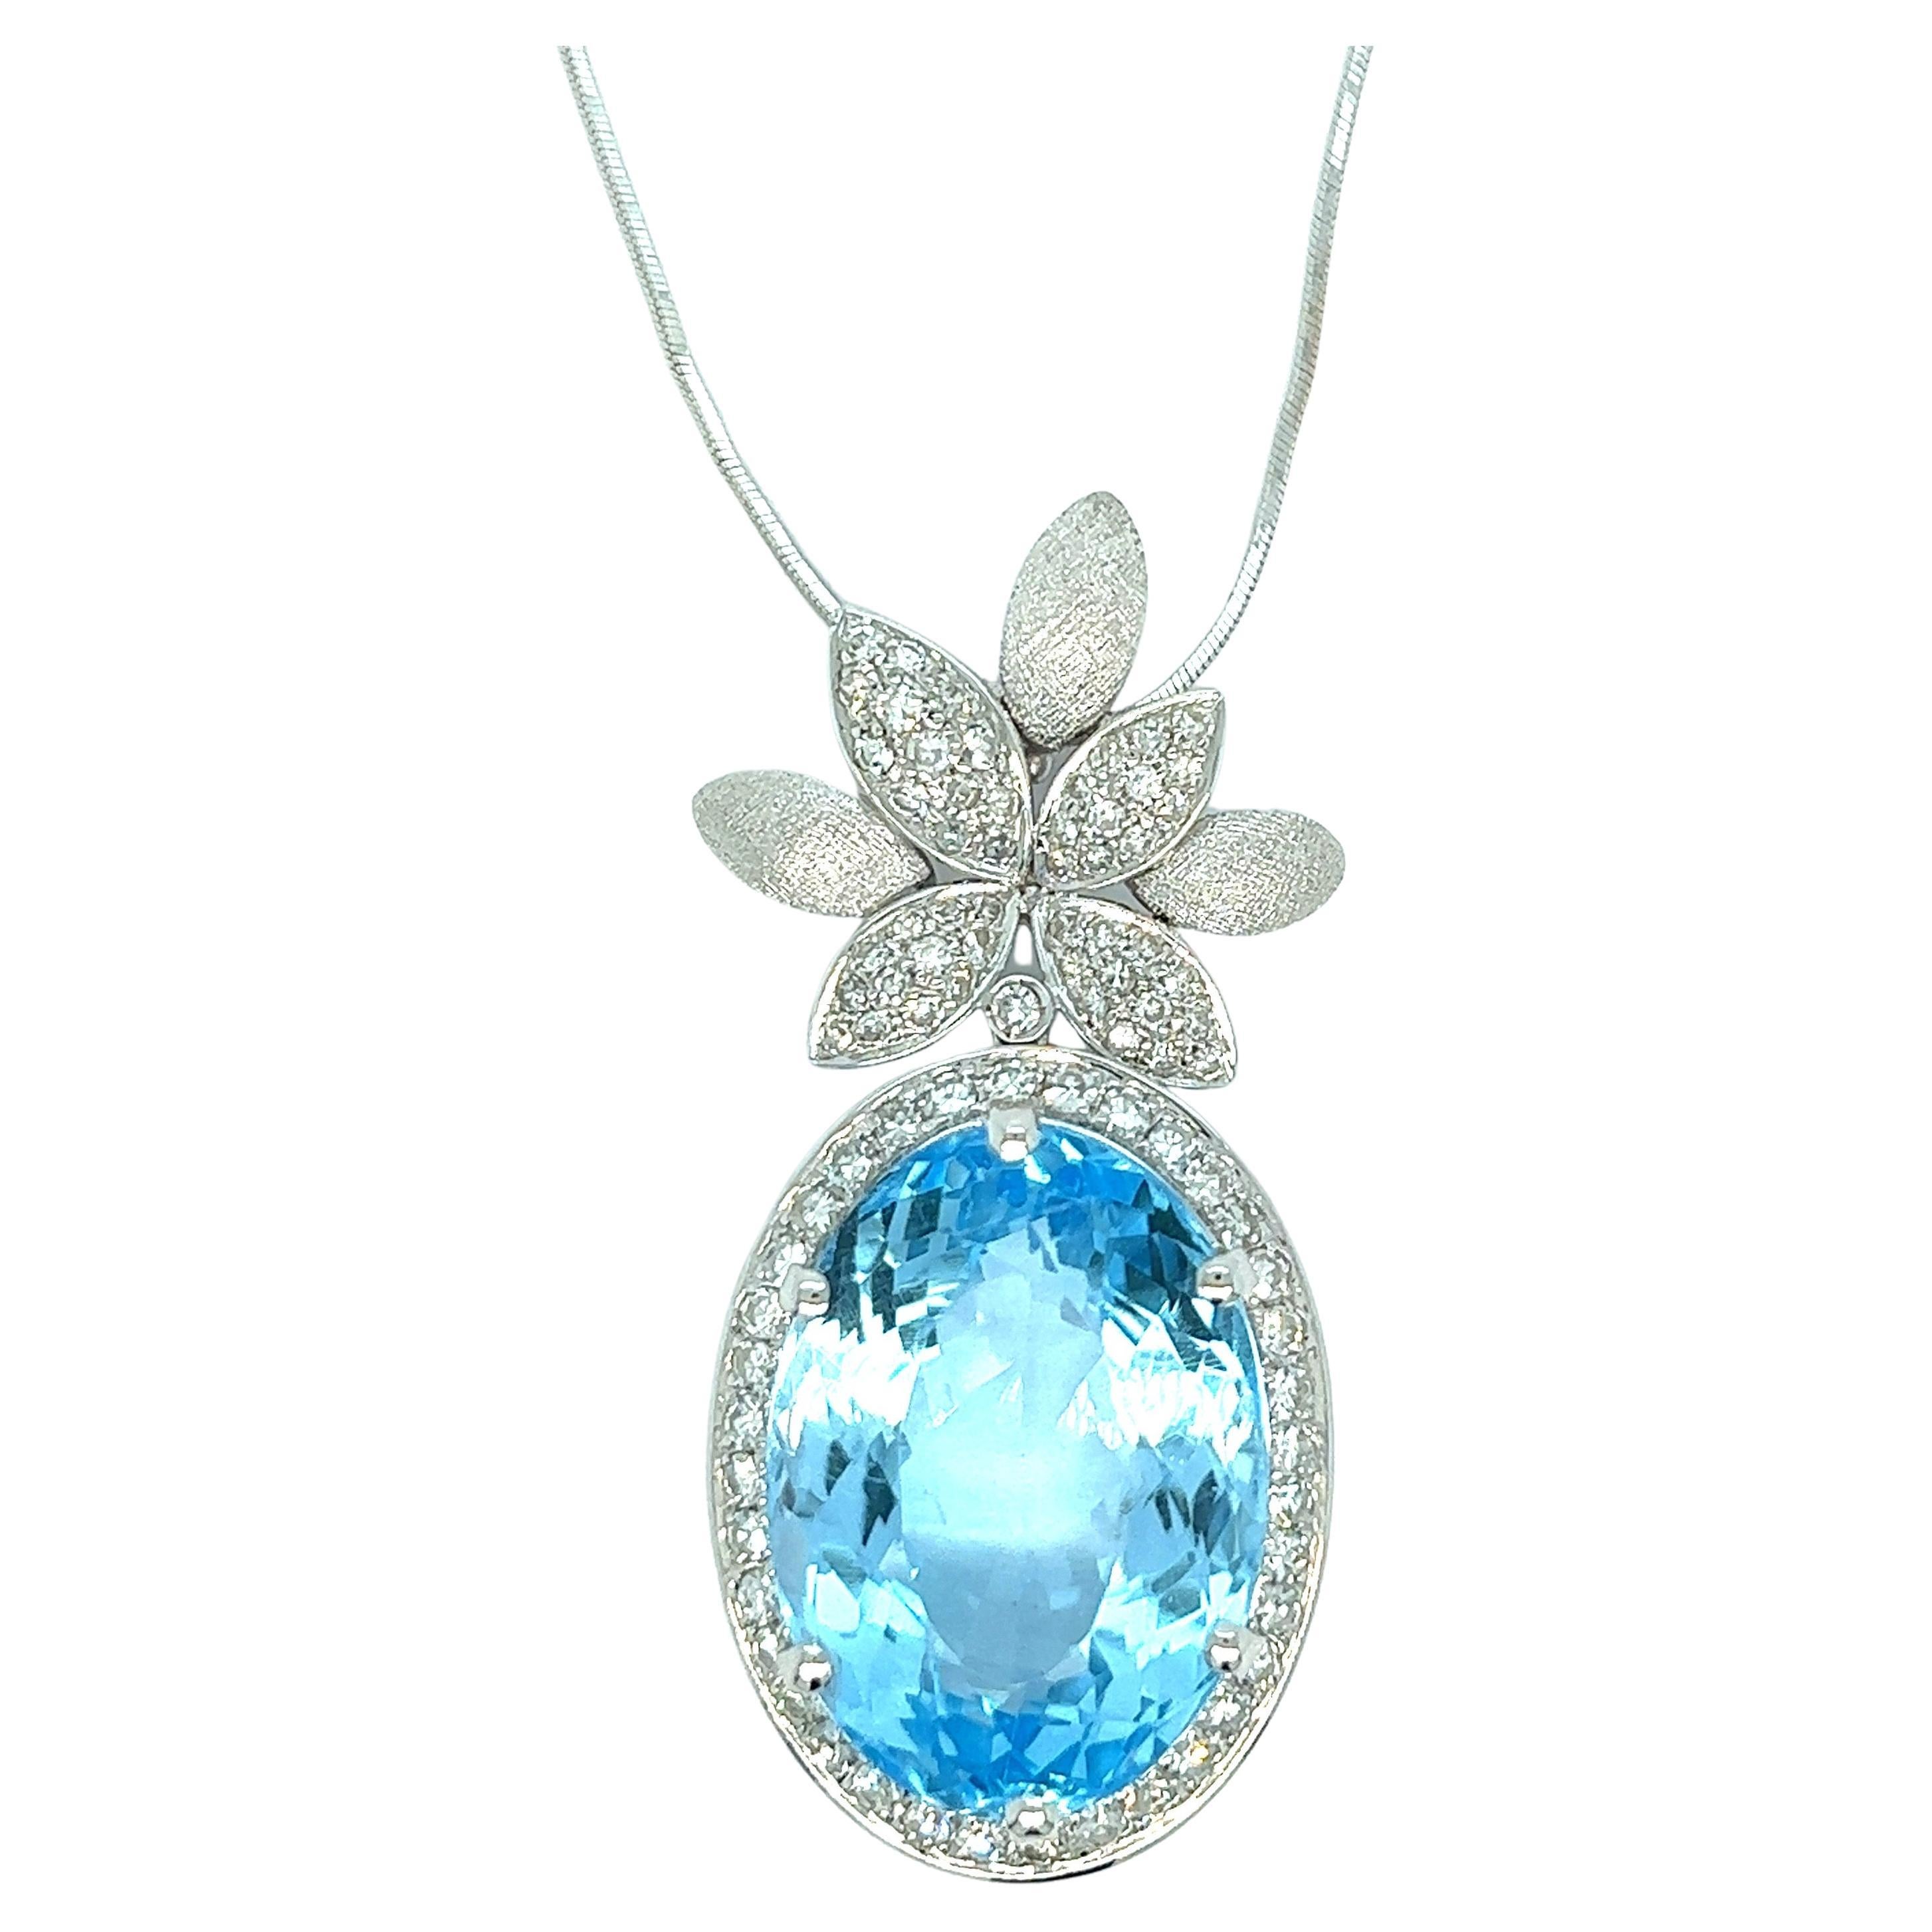 Blue Topaz & Diamonds Pendant Necklace